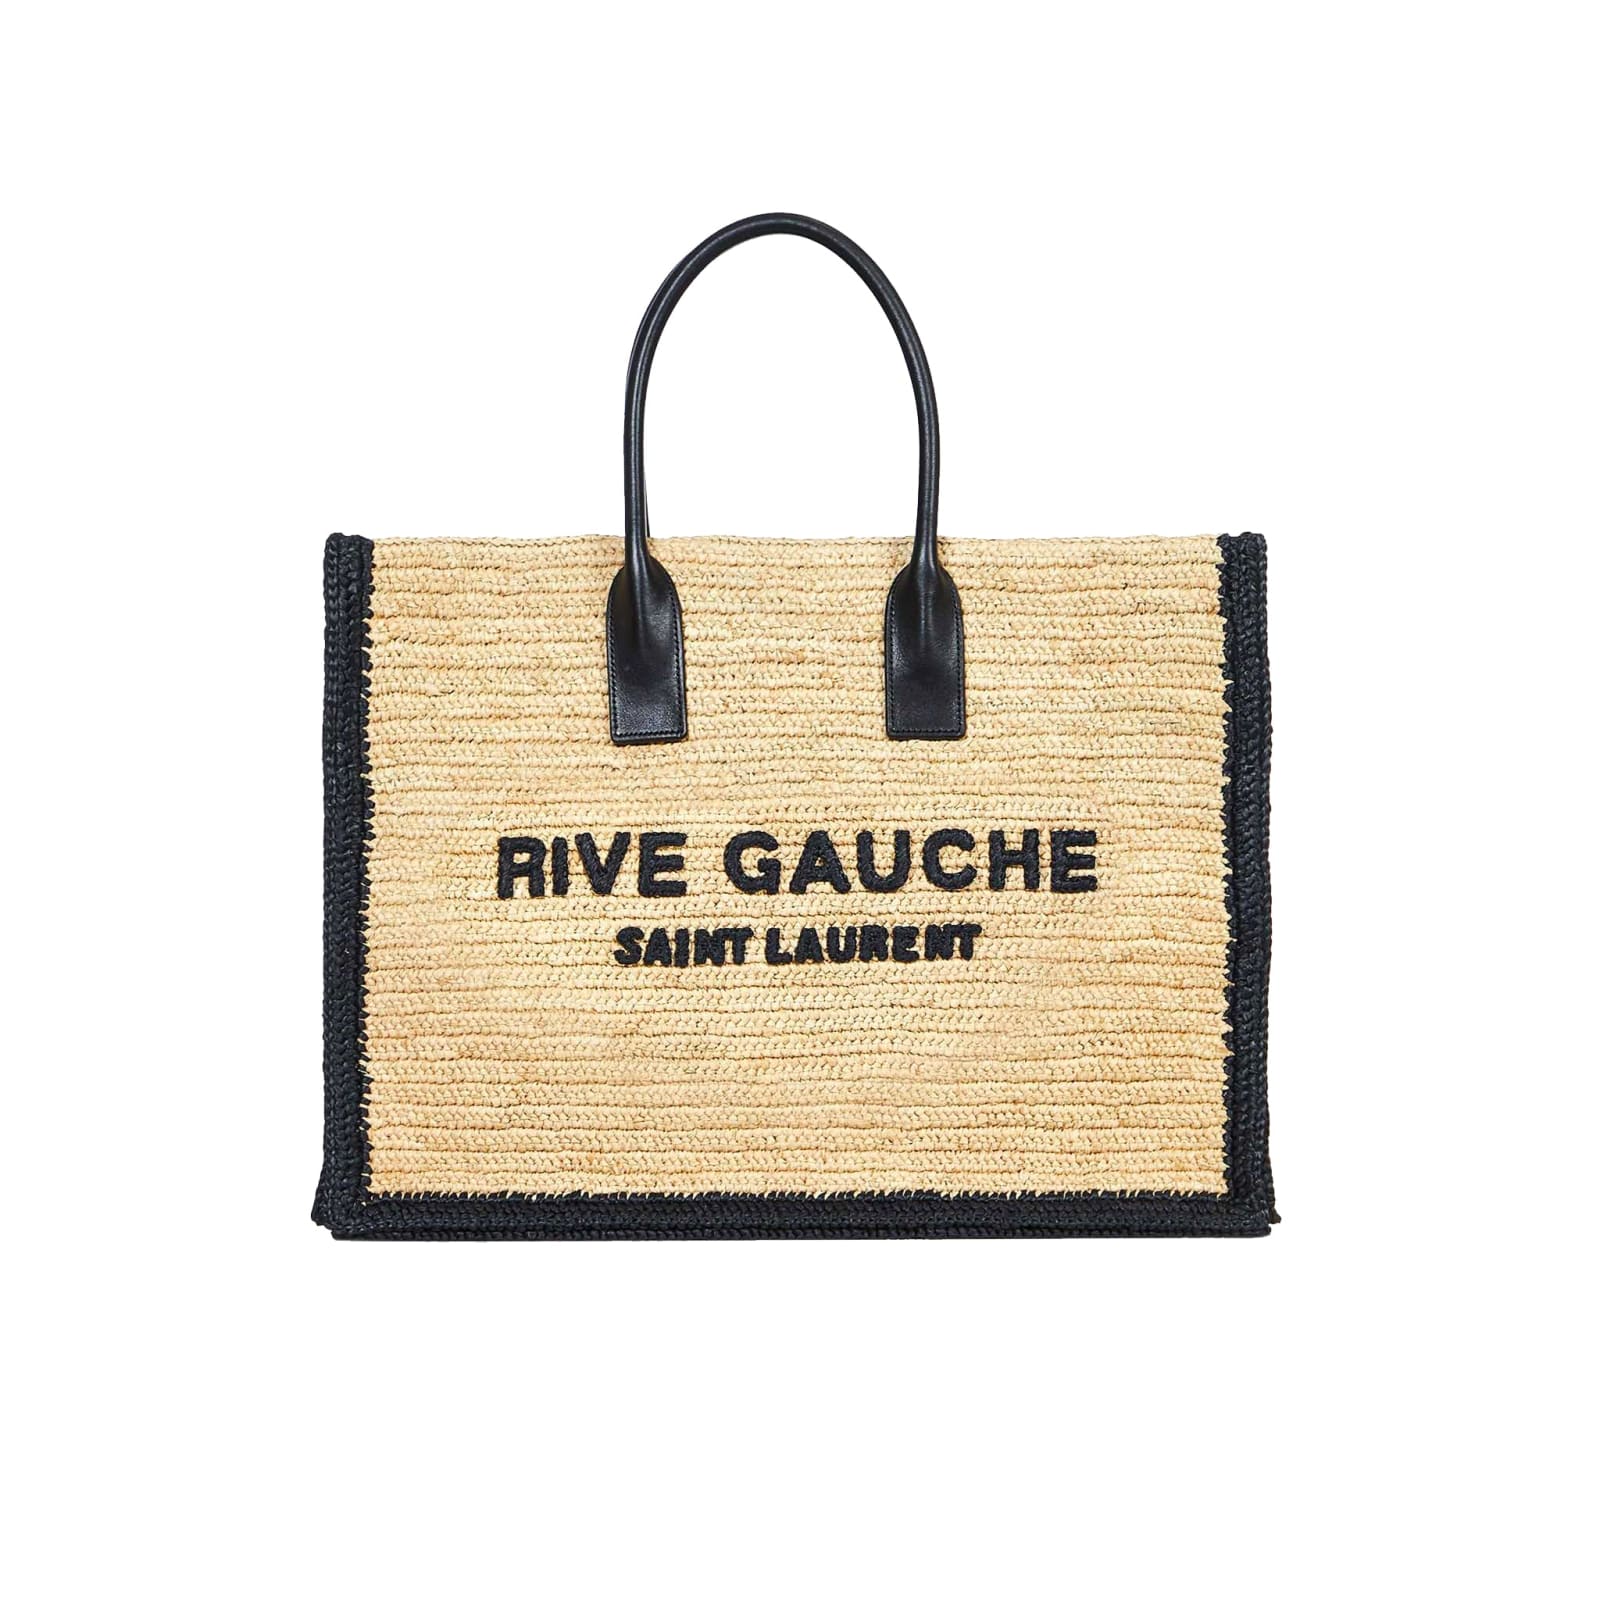 Saint Laurent Rive Gauche Tote Bag